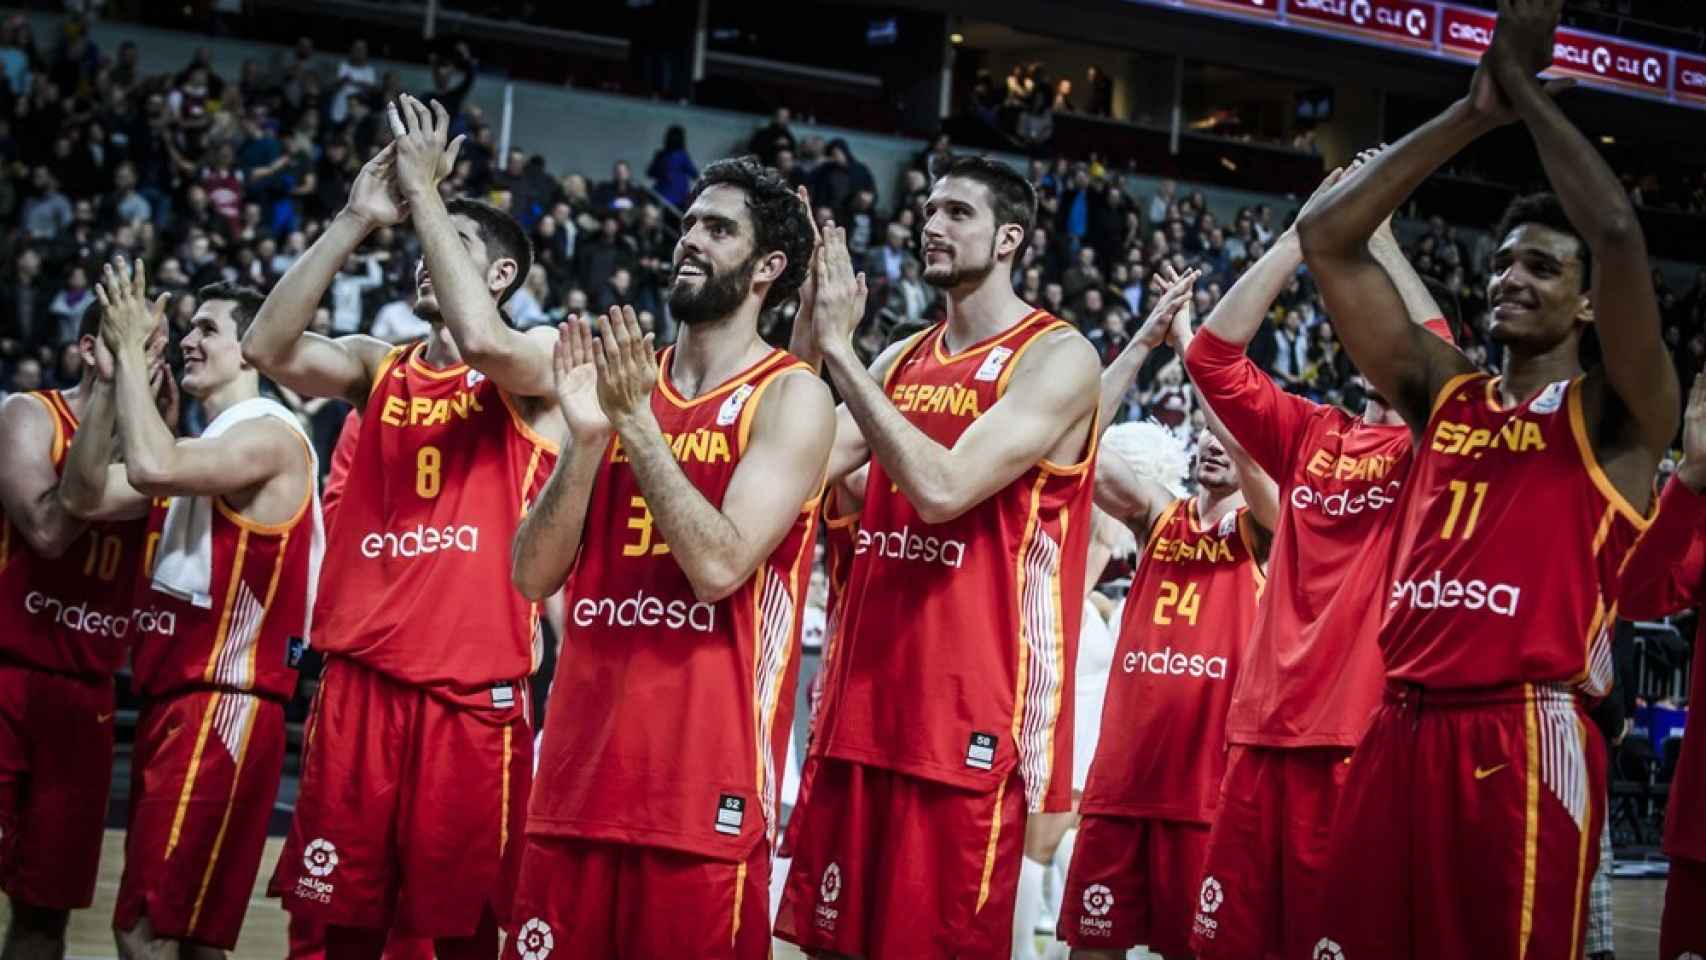 La selección española celebra la victoria ante Letonia en las ventanas FIBA. Foto: fiba.basketball